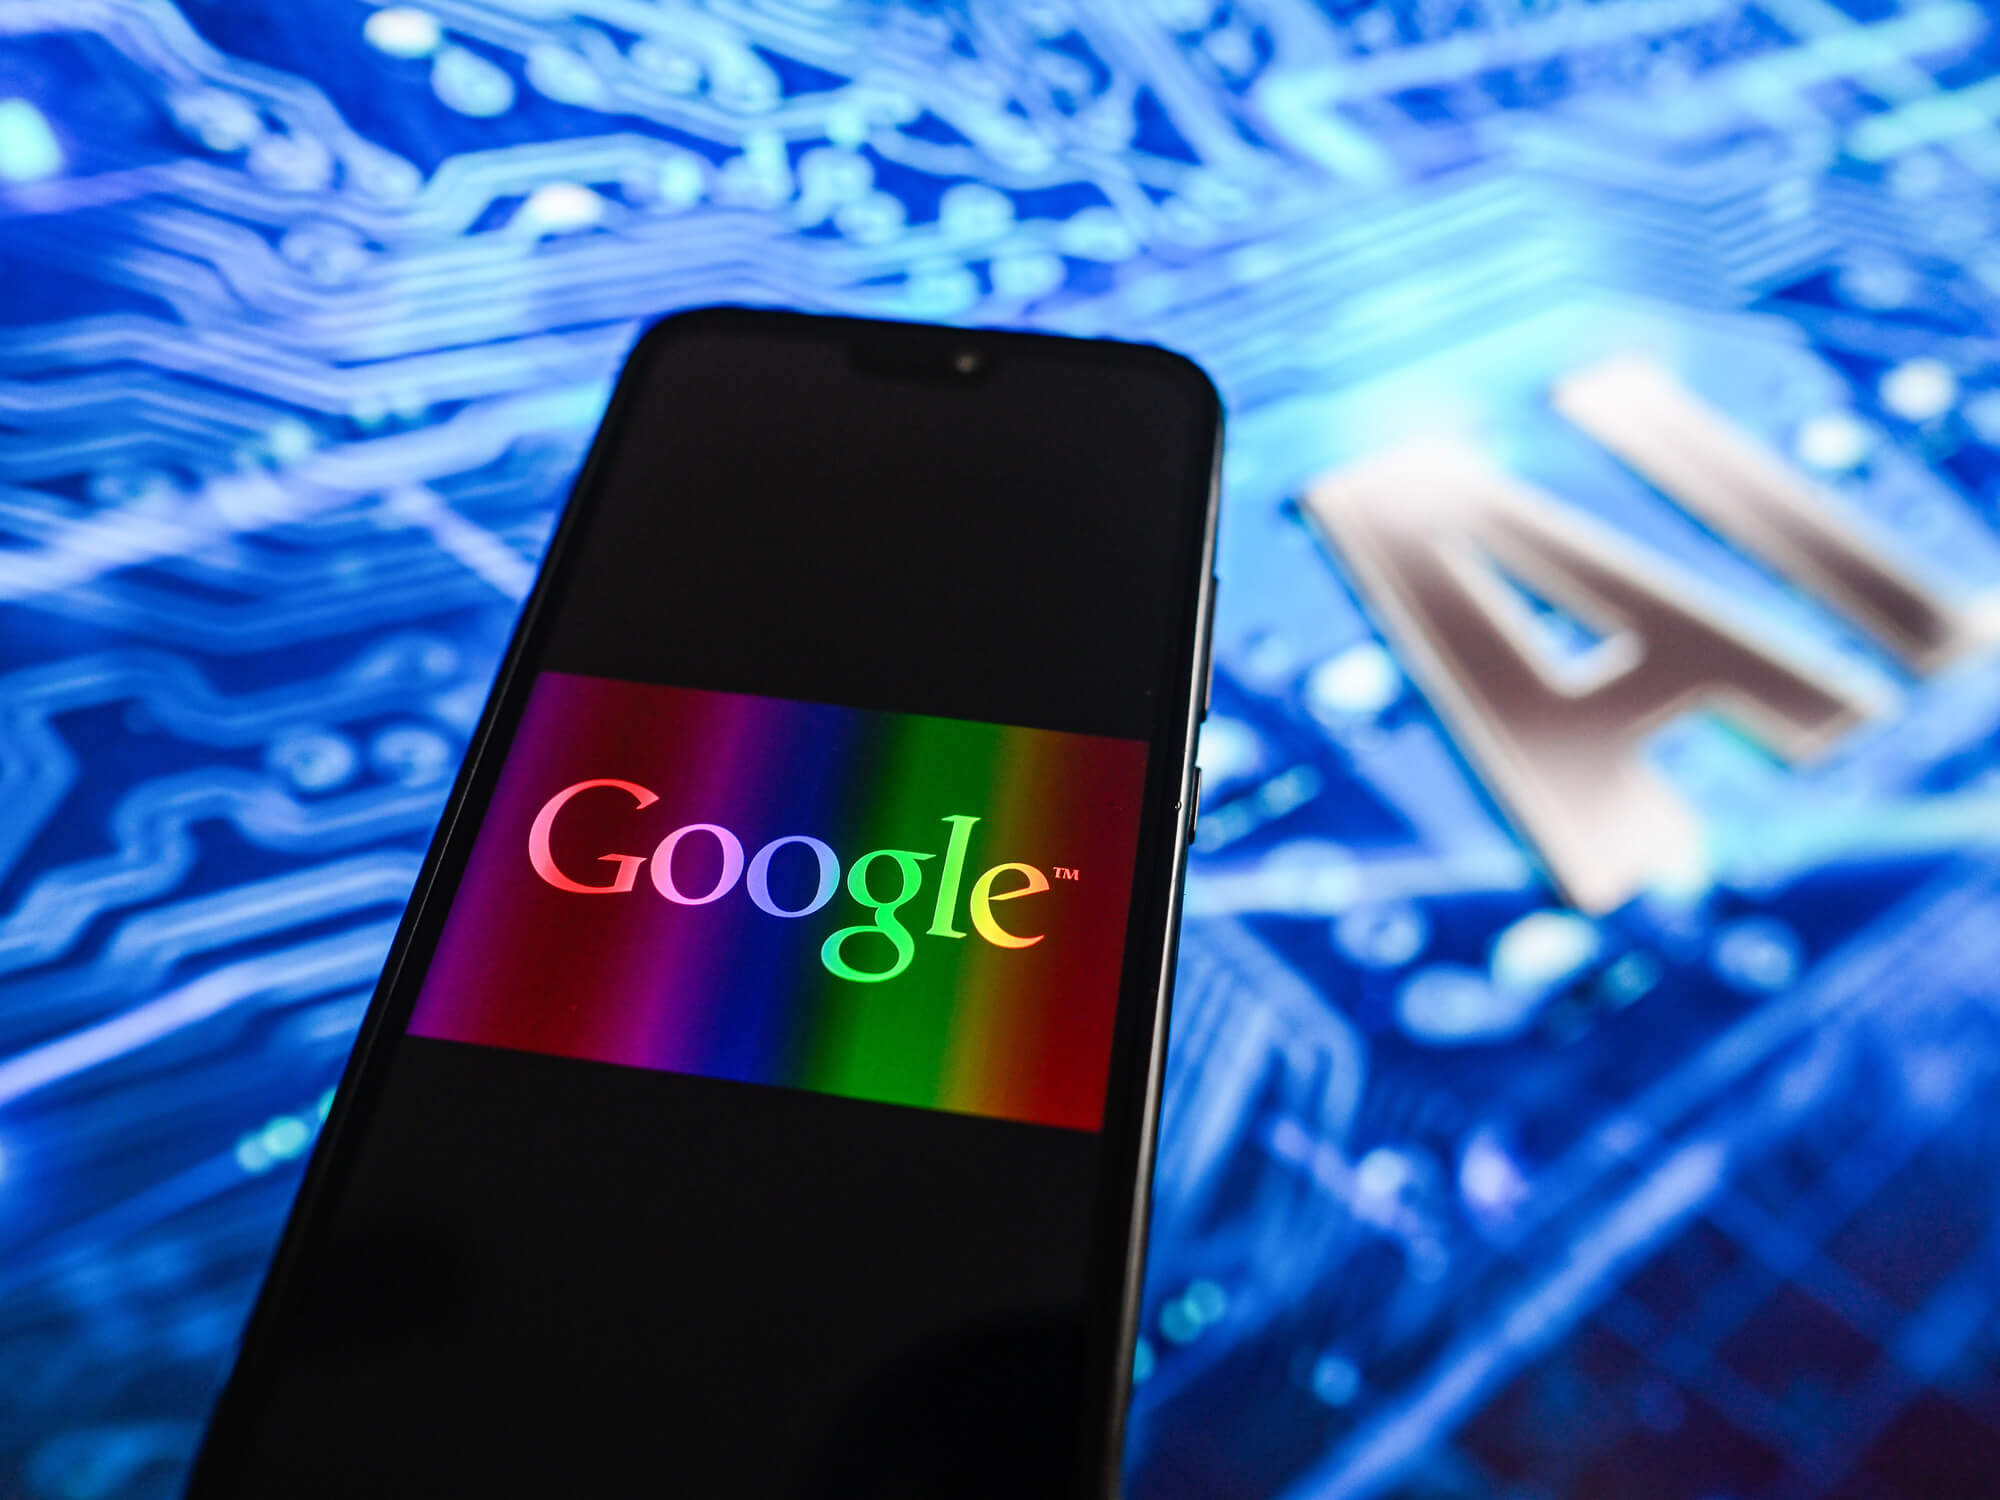 Google smartphone on AI background